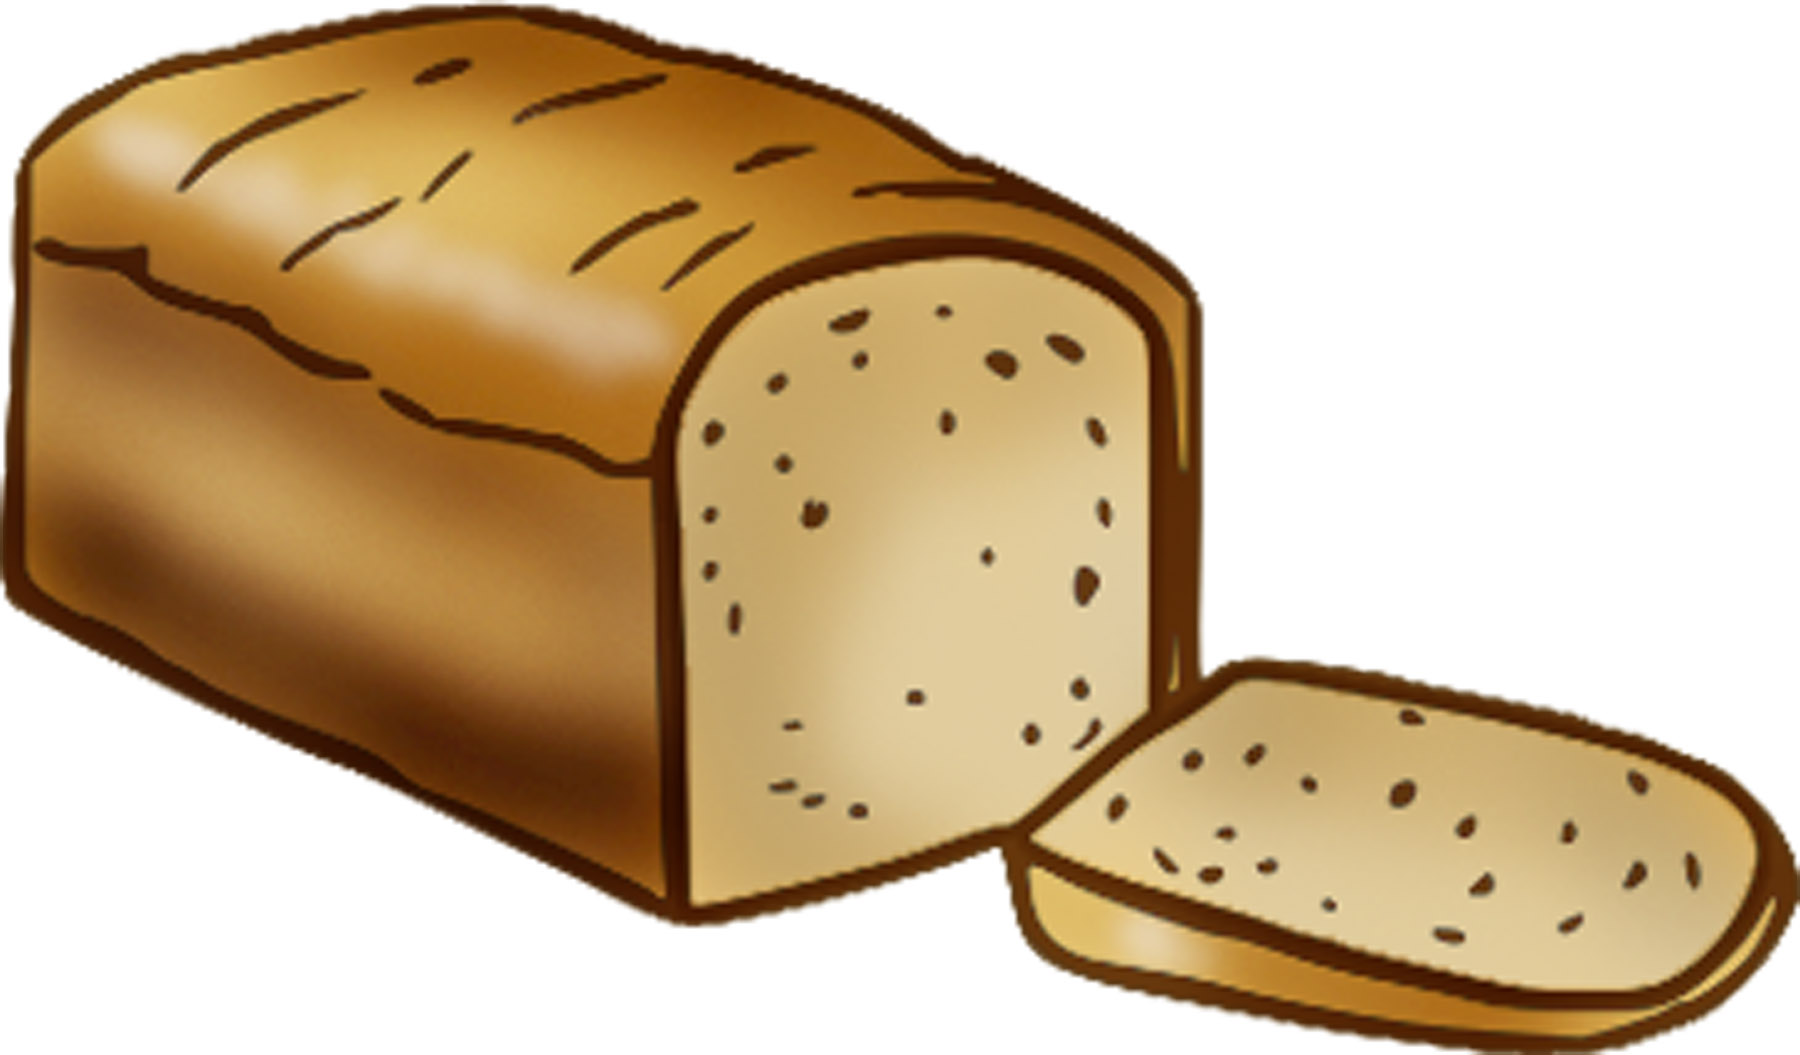 Loaf of bread bread clipart and illustration bread clip art vector